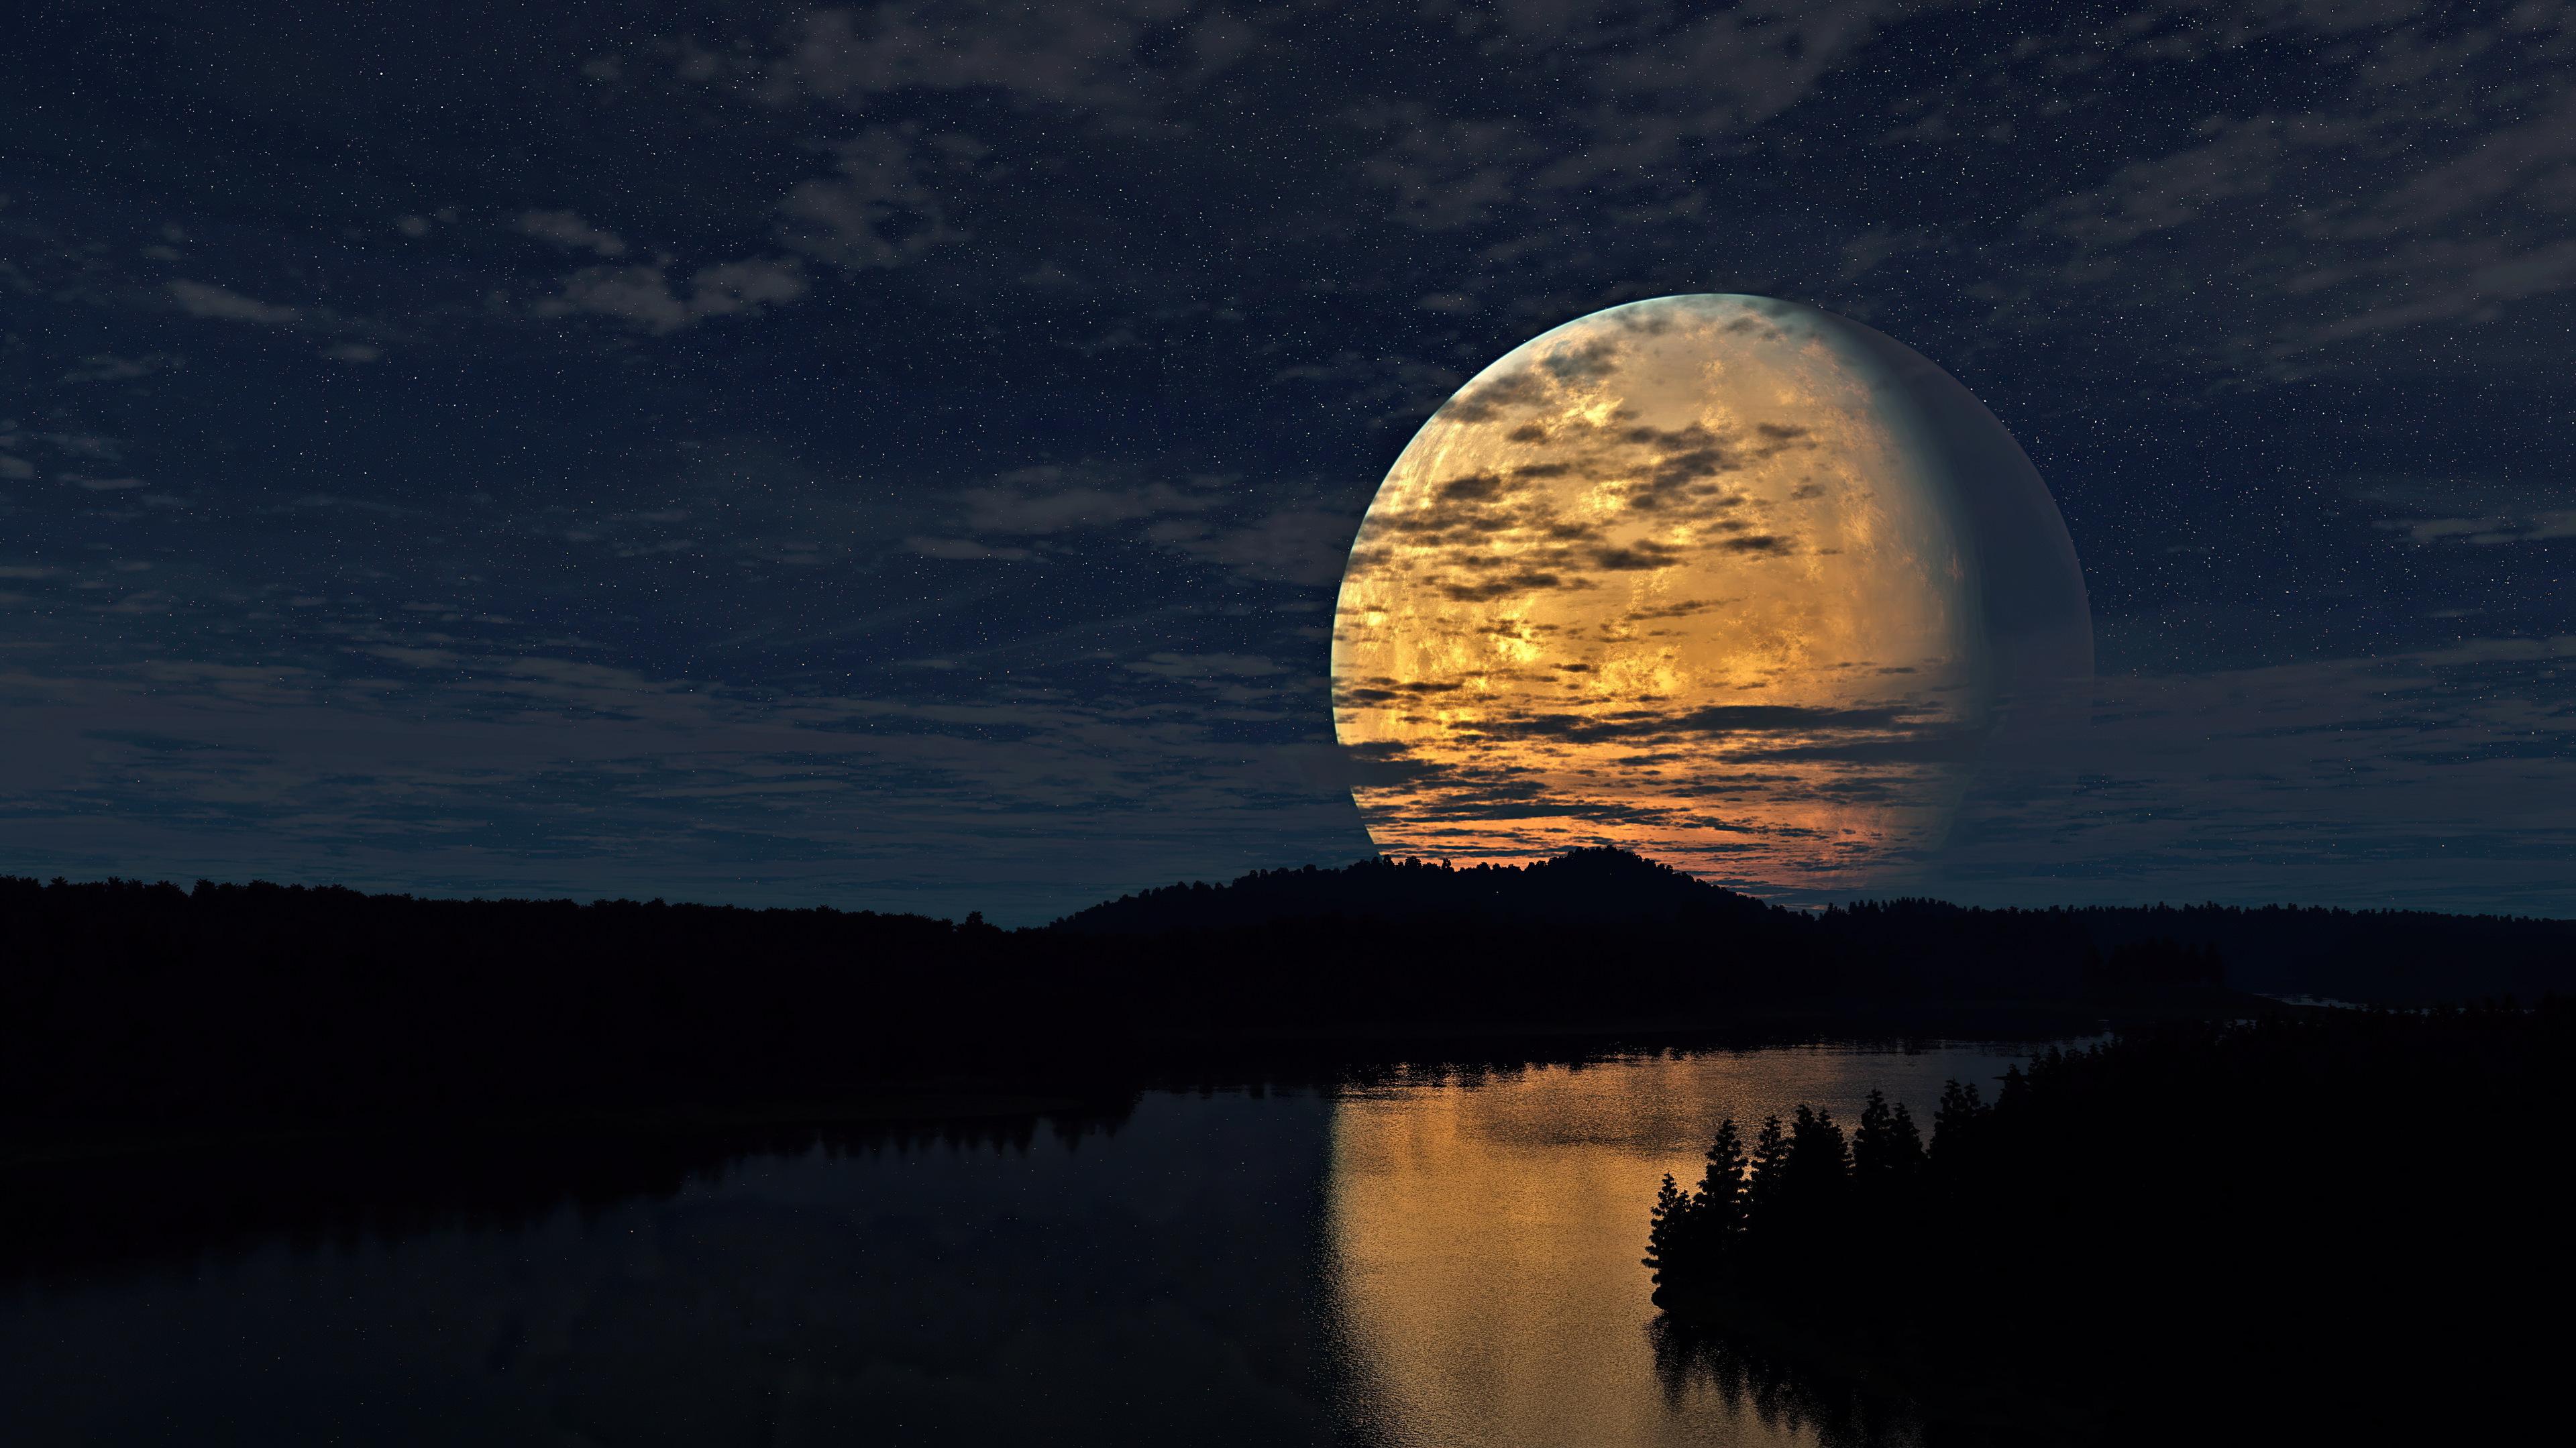 Big Full Moon Night Sky Scenery 4k Wallpaper